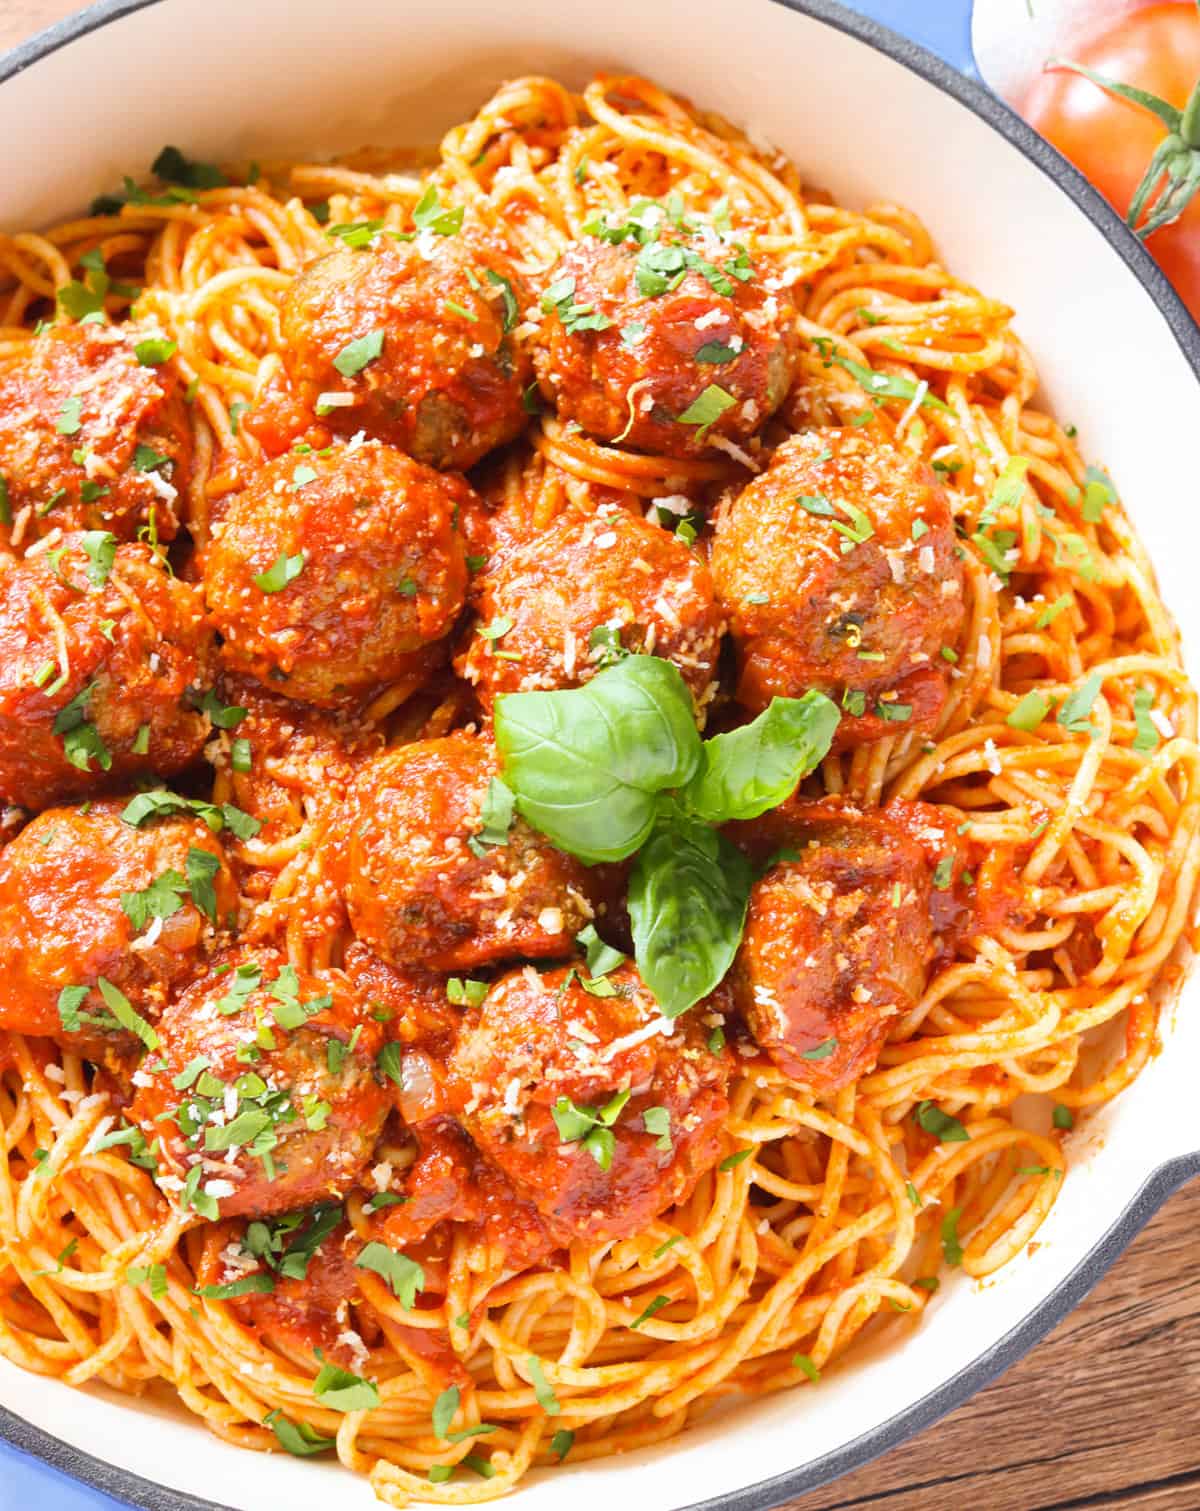 Spaghetti & Meatballs, Lunch & Dinner Menu